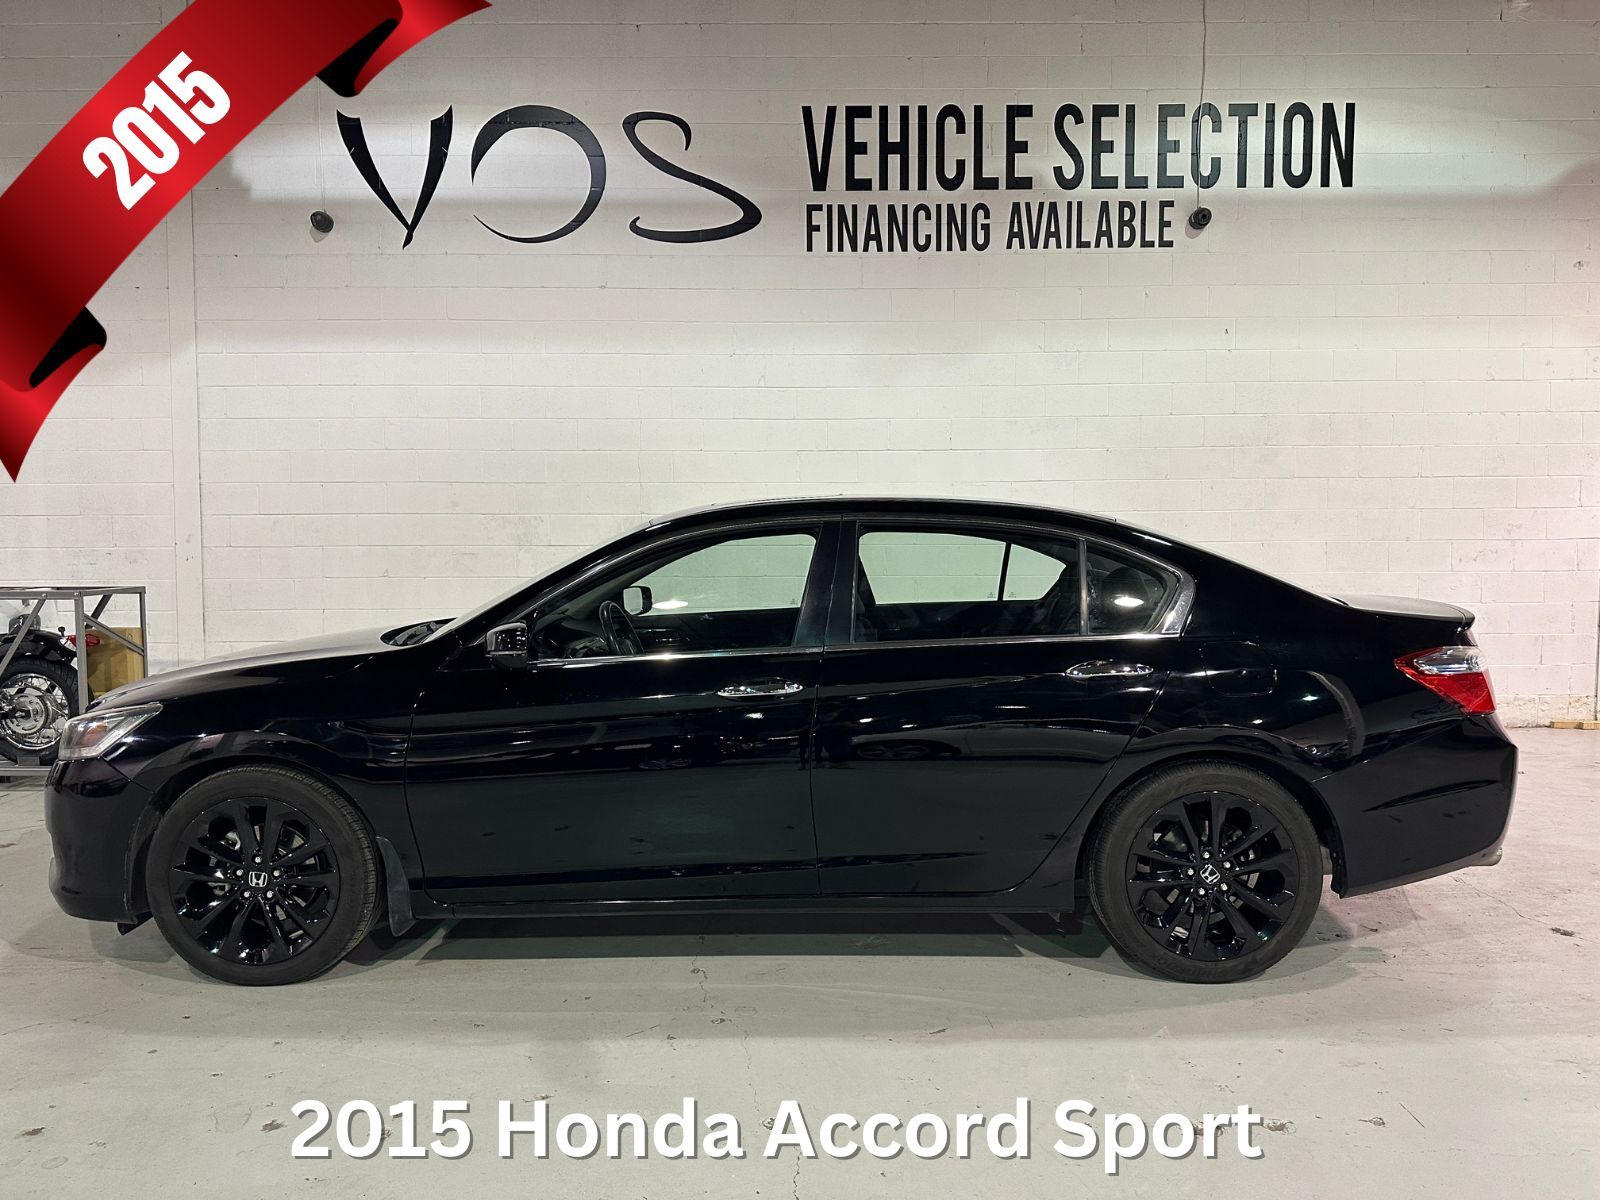 2015 Honda Accord Sport - V5829 - -Financing Available**